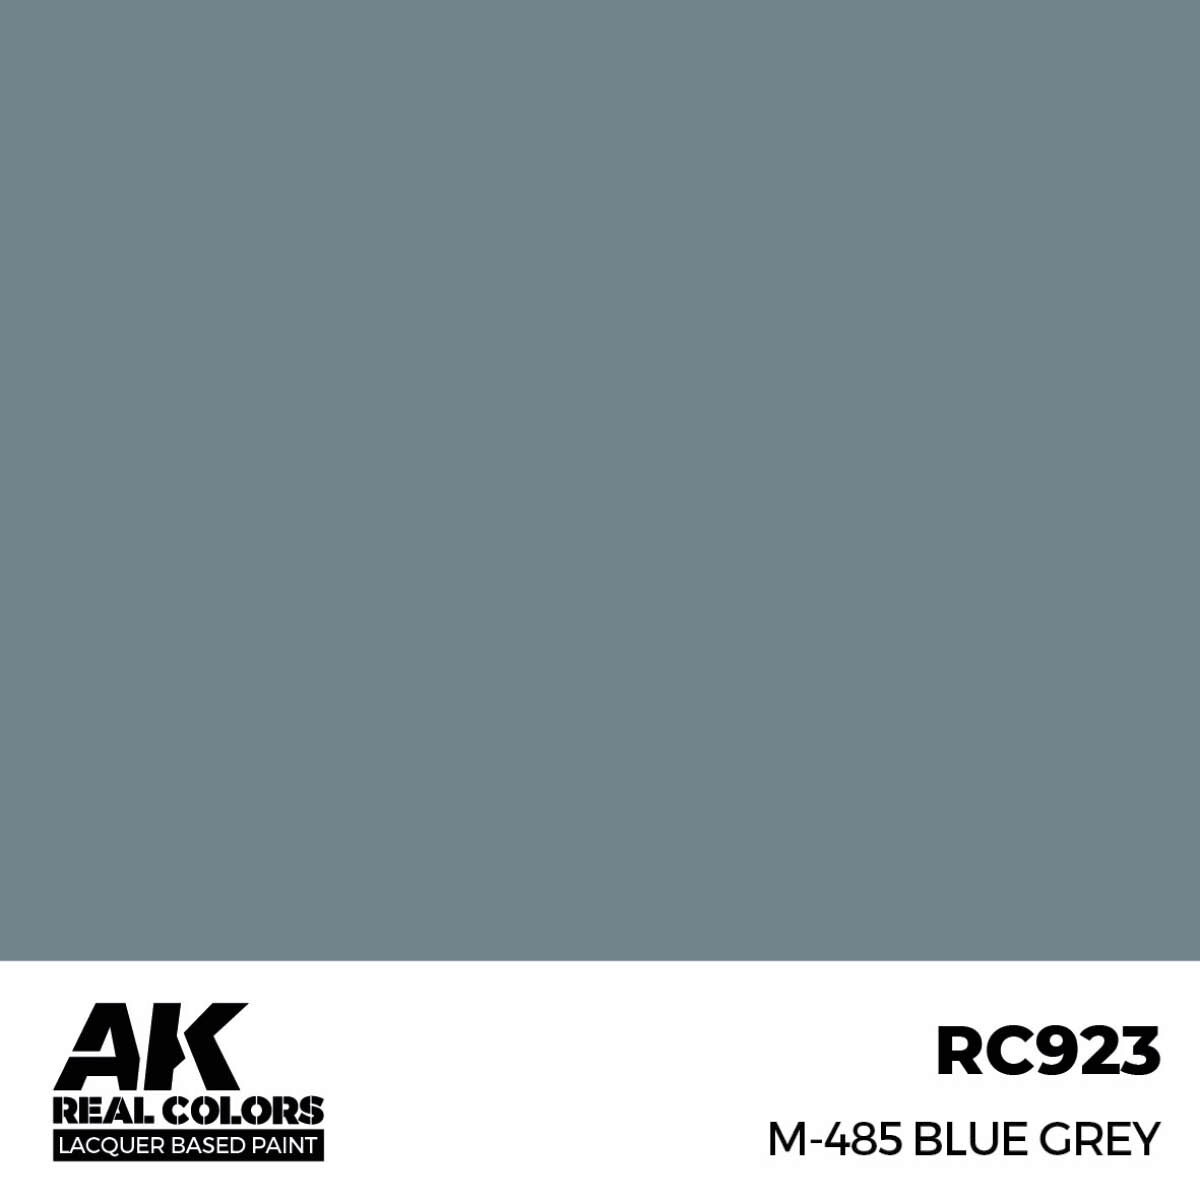 AK RC923 Real Colors M-485 Blue Grey 17 ml.